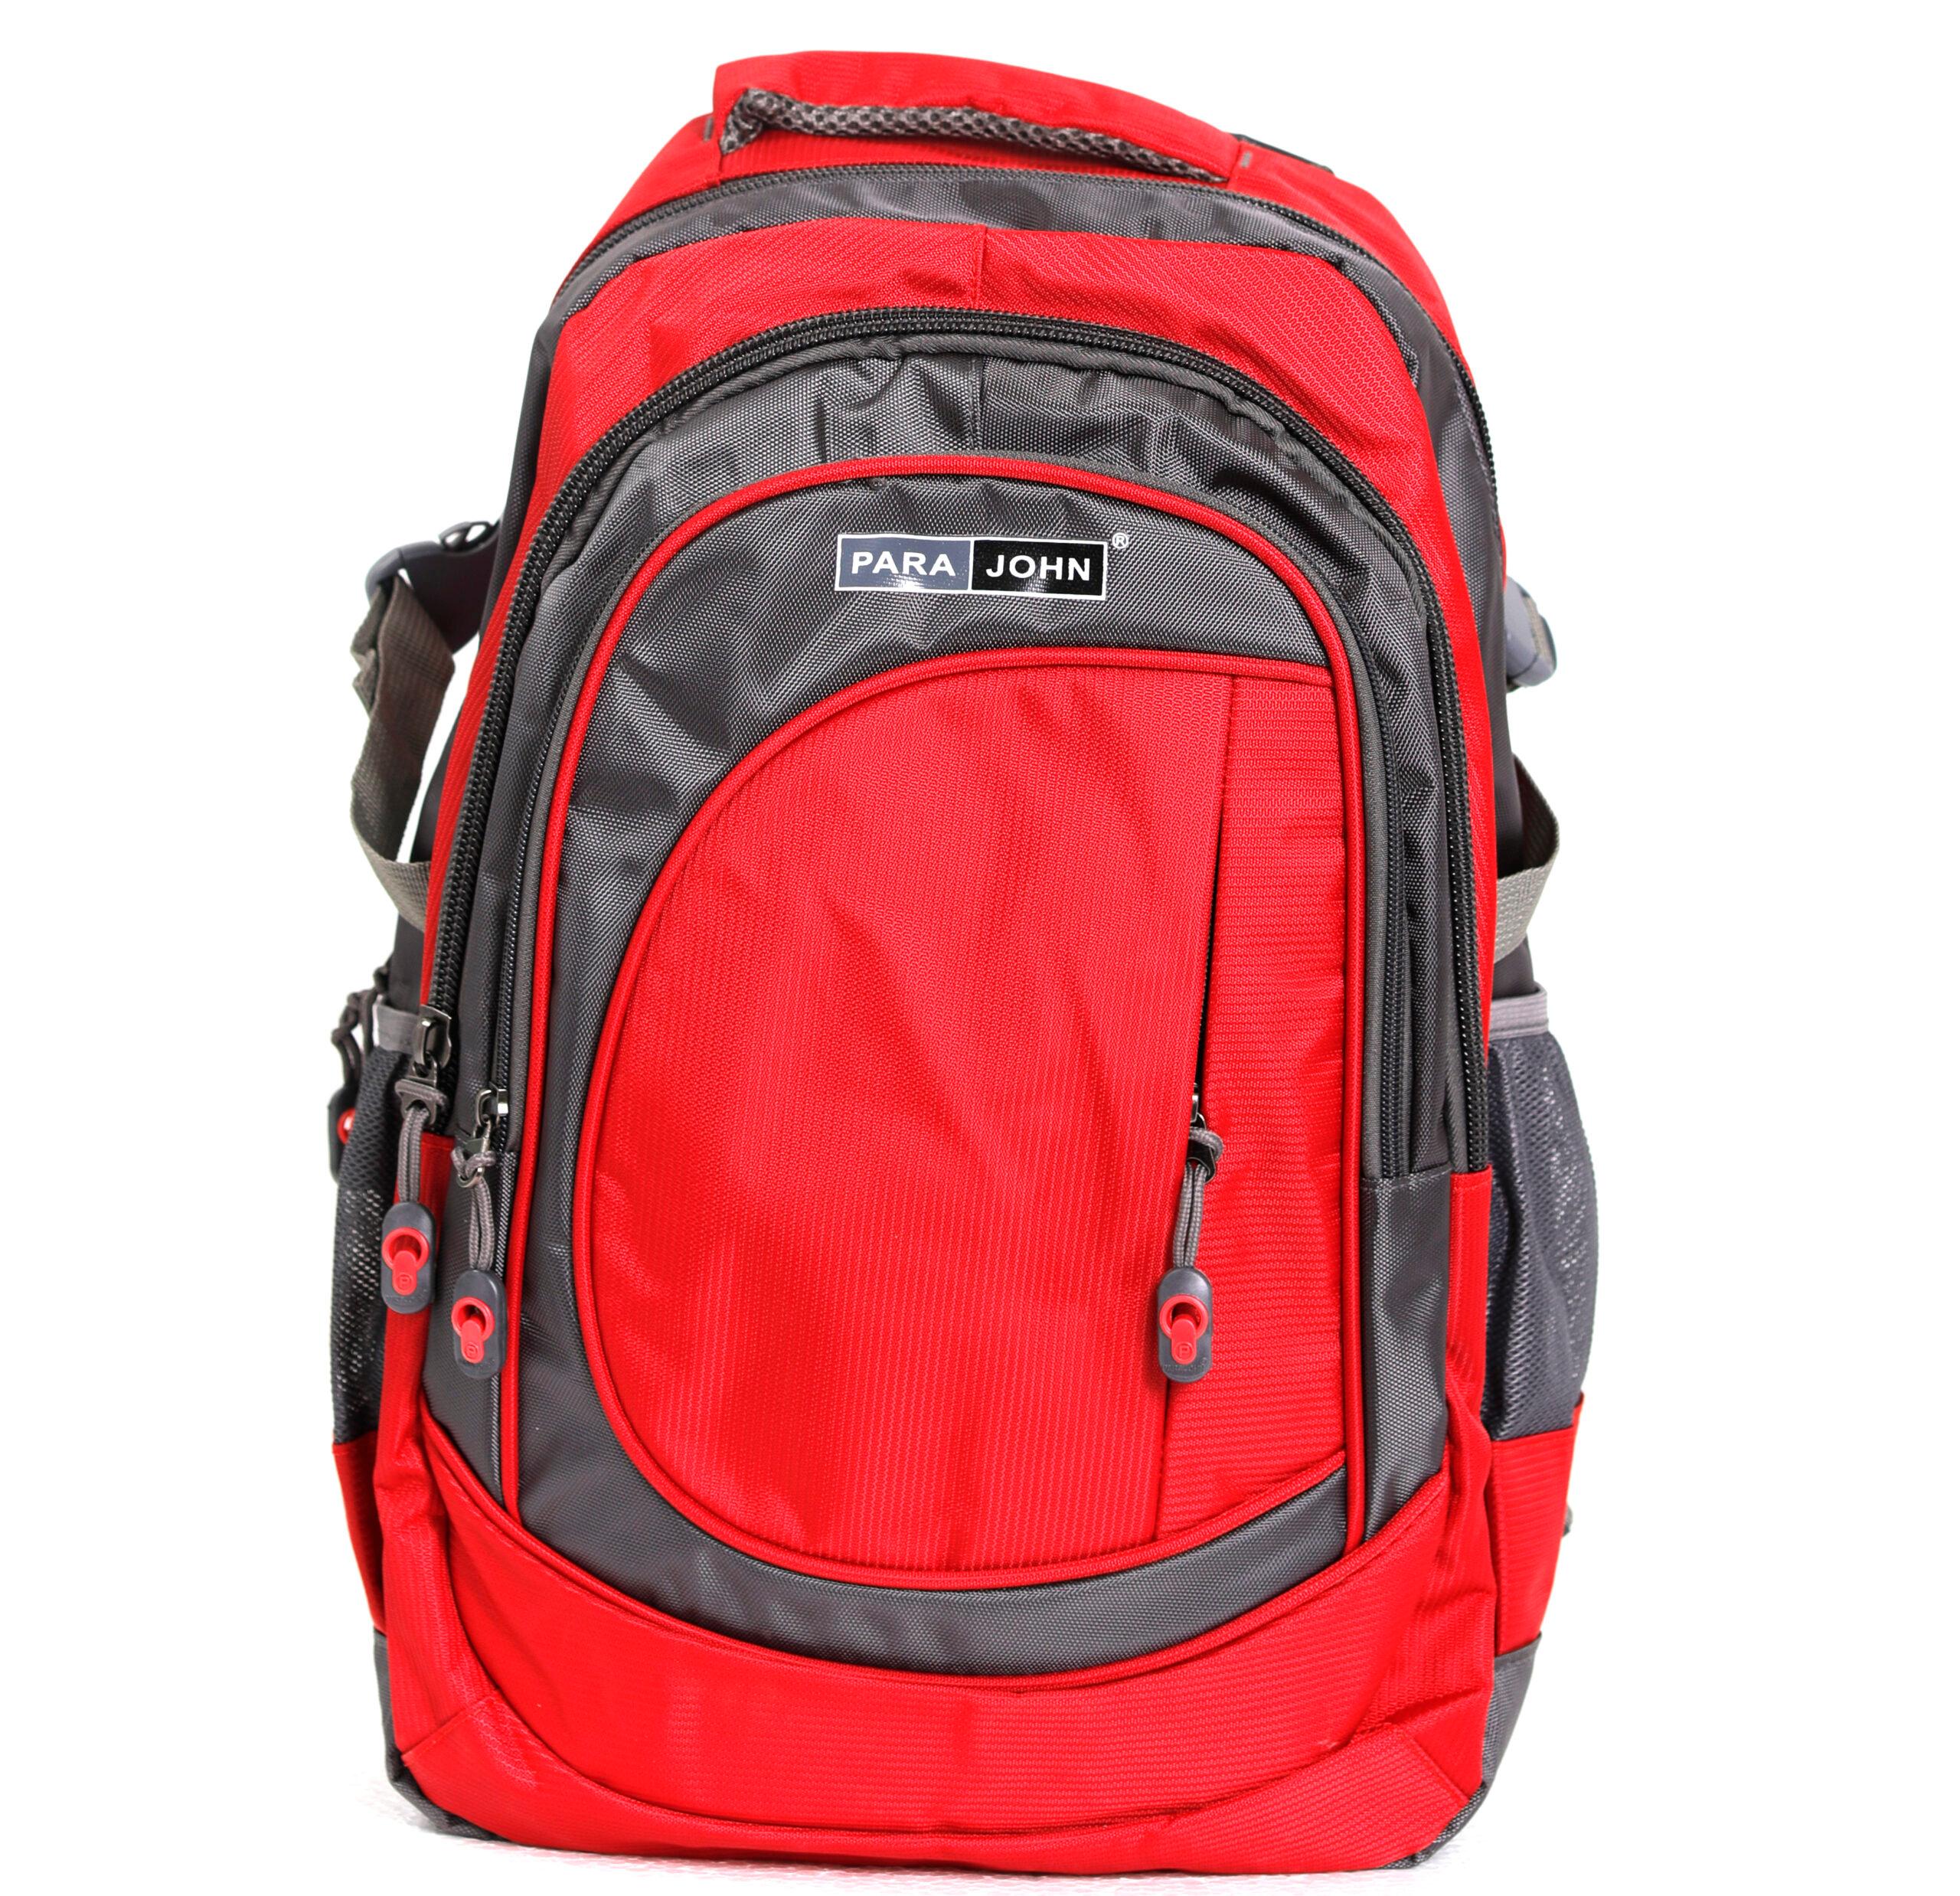 شنطة ظهر متعددة الإستخدامات قياس 22 إنش لون أحمر Backpack For School, Travel & Work, 22''- Unisex Adults' Backpack - Multi-Function - PARA JOHN